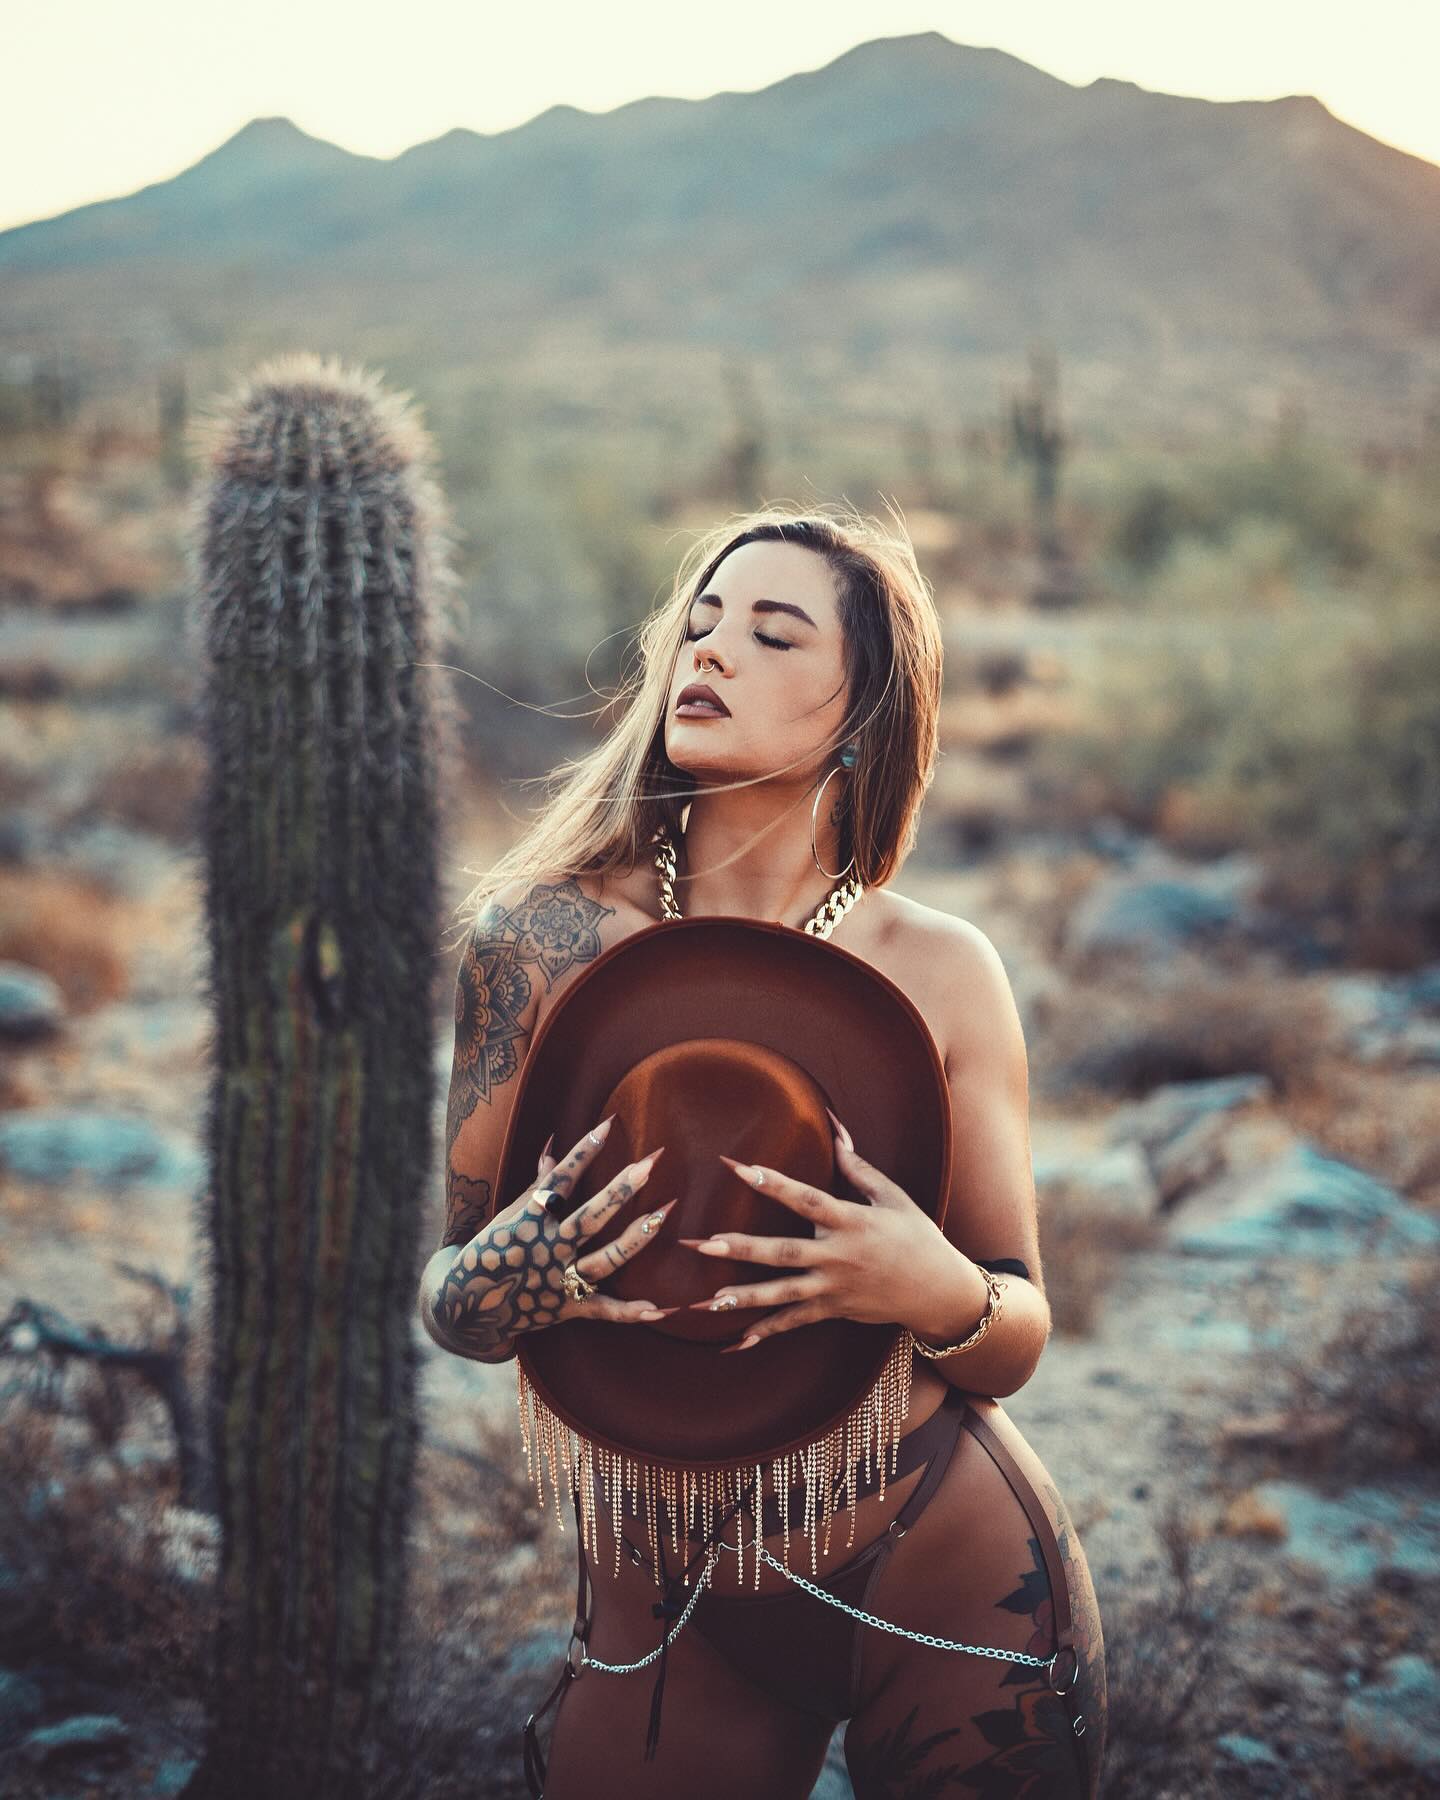 ✖️"Rodeo Pt.2"✖️
•
•
•
@rebecca.madrigal_ x @91chainz 
•
#susnet #light #desert #tattoomodel #91chainz #cowgirl #sonya7iv #alphacollective